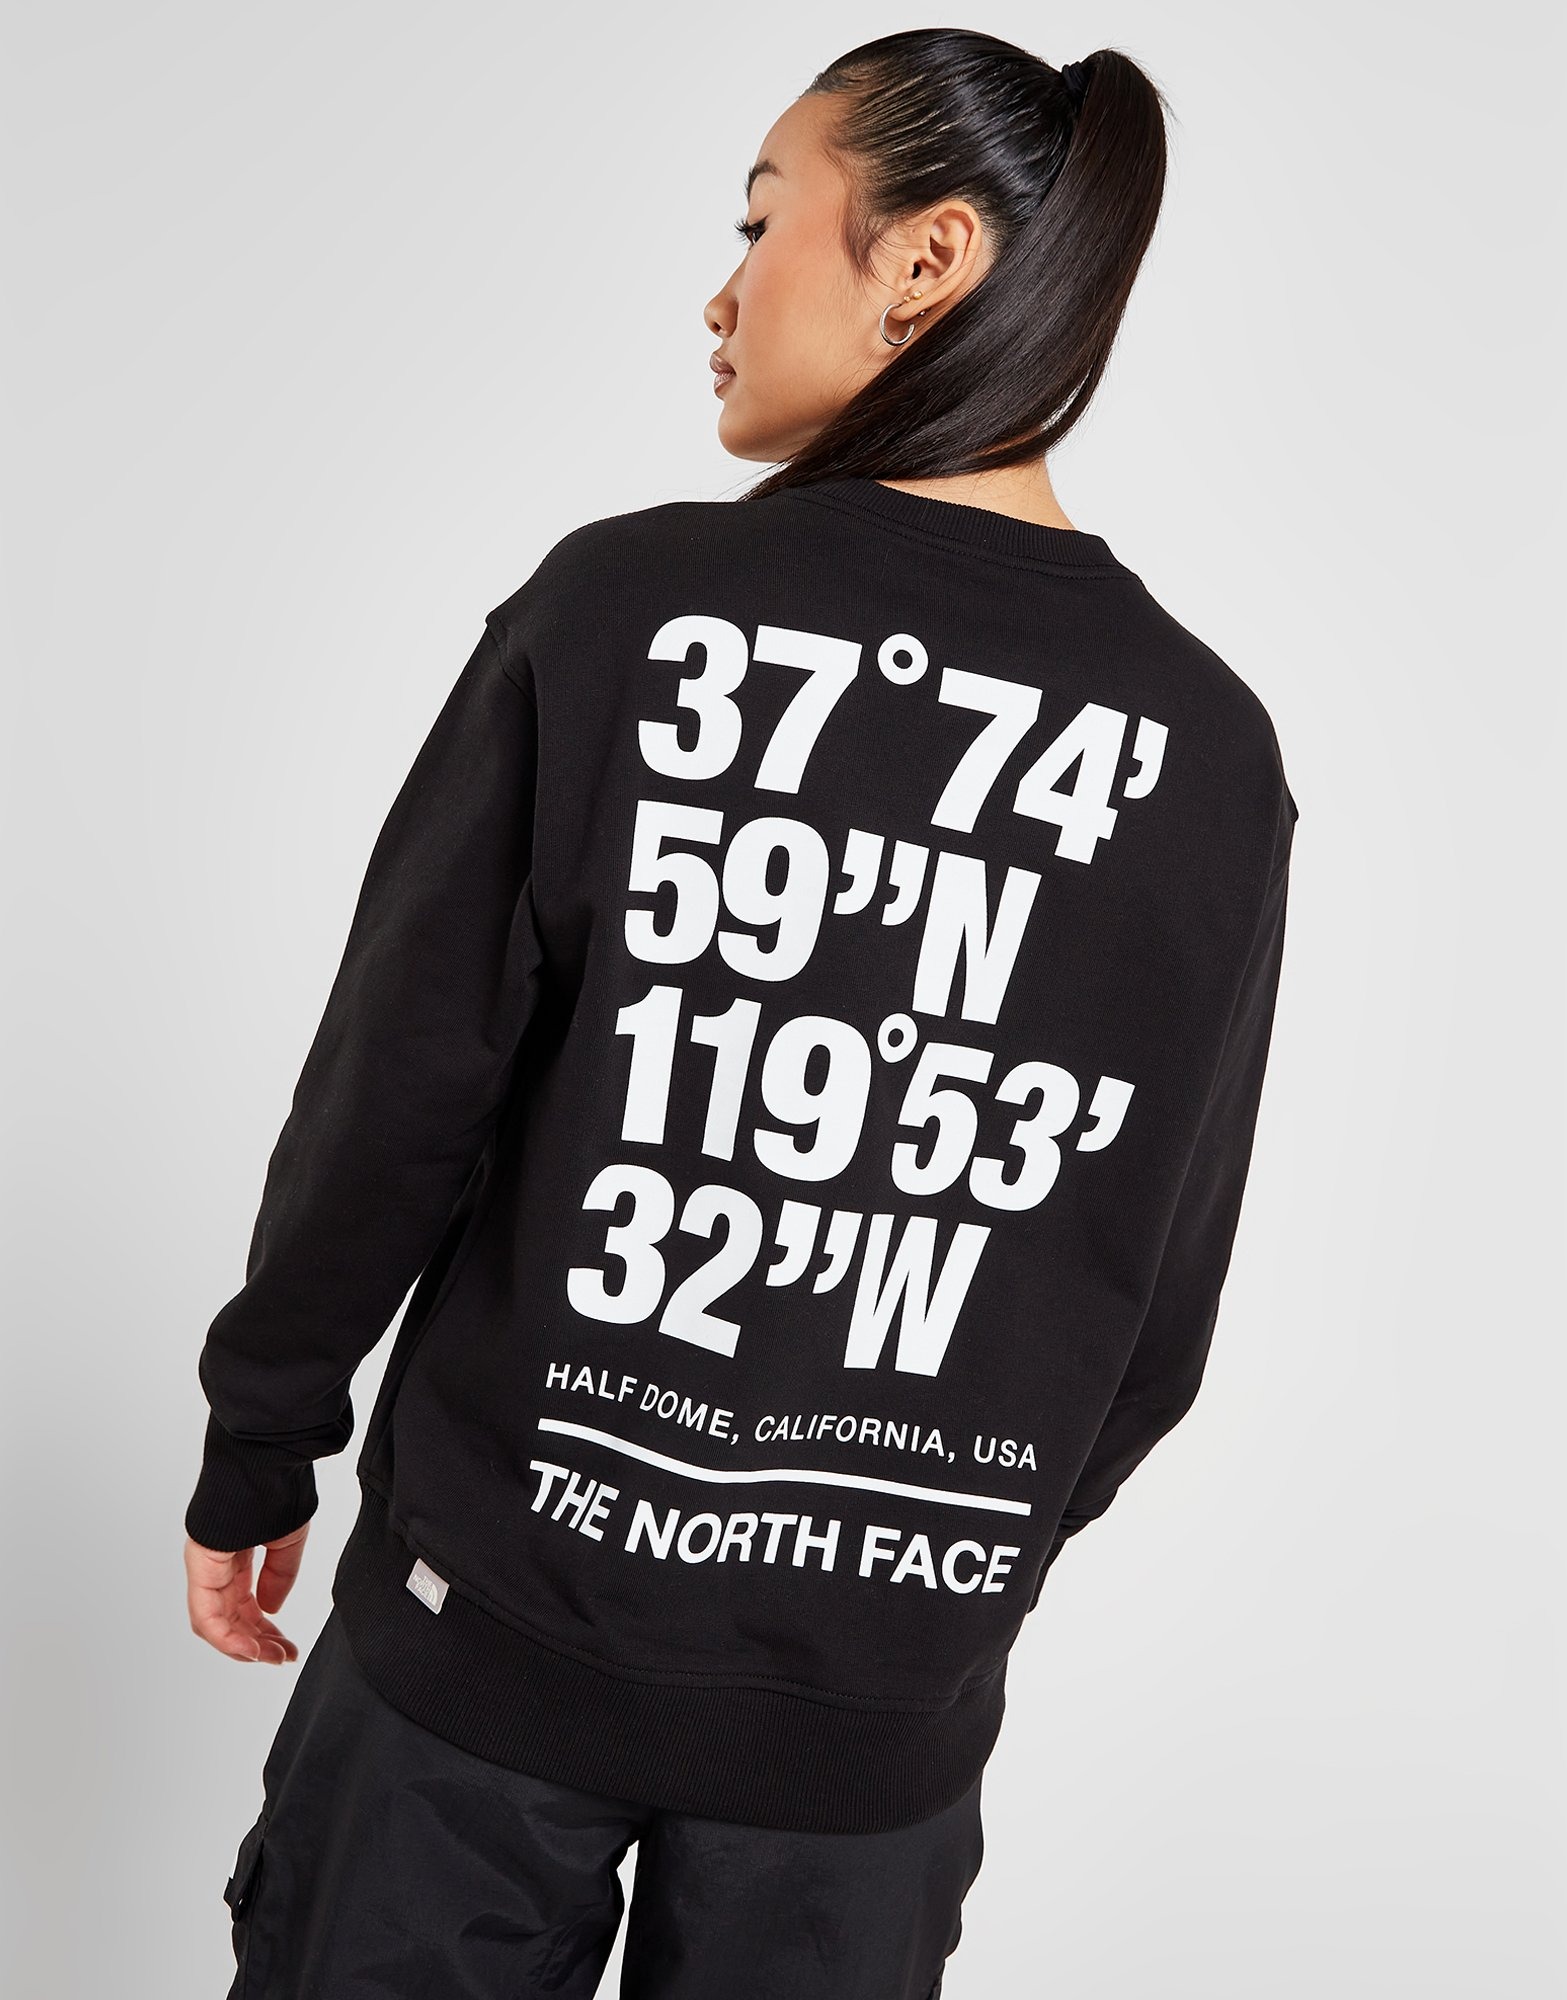 The North Face Coordinates Sweatshirt JD Sports